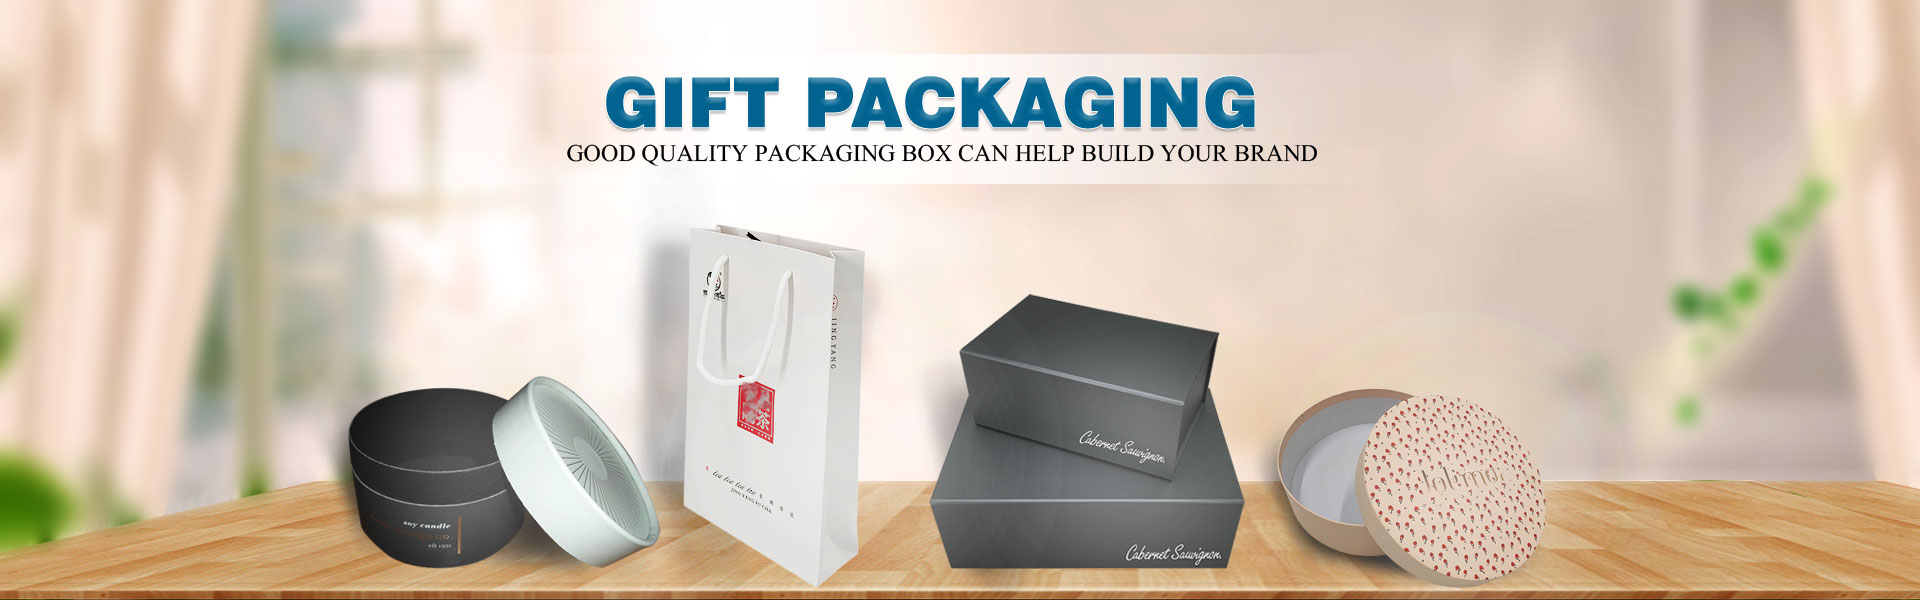 scatola di carta, scatola regalo, torta,Dongguan Yisheng Packaging Co., Ltd